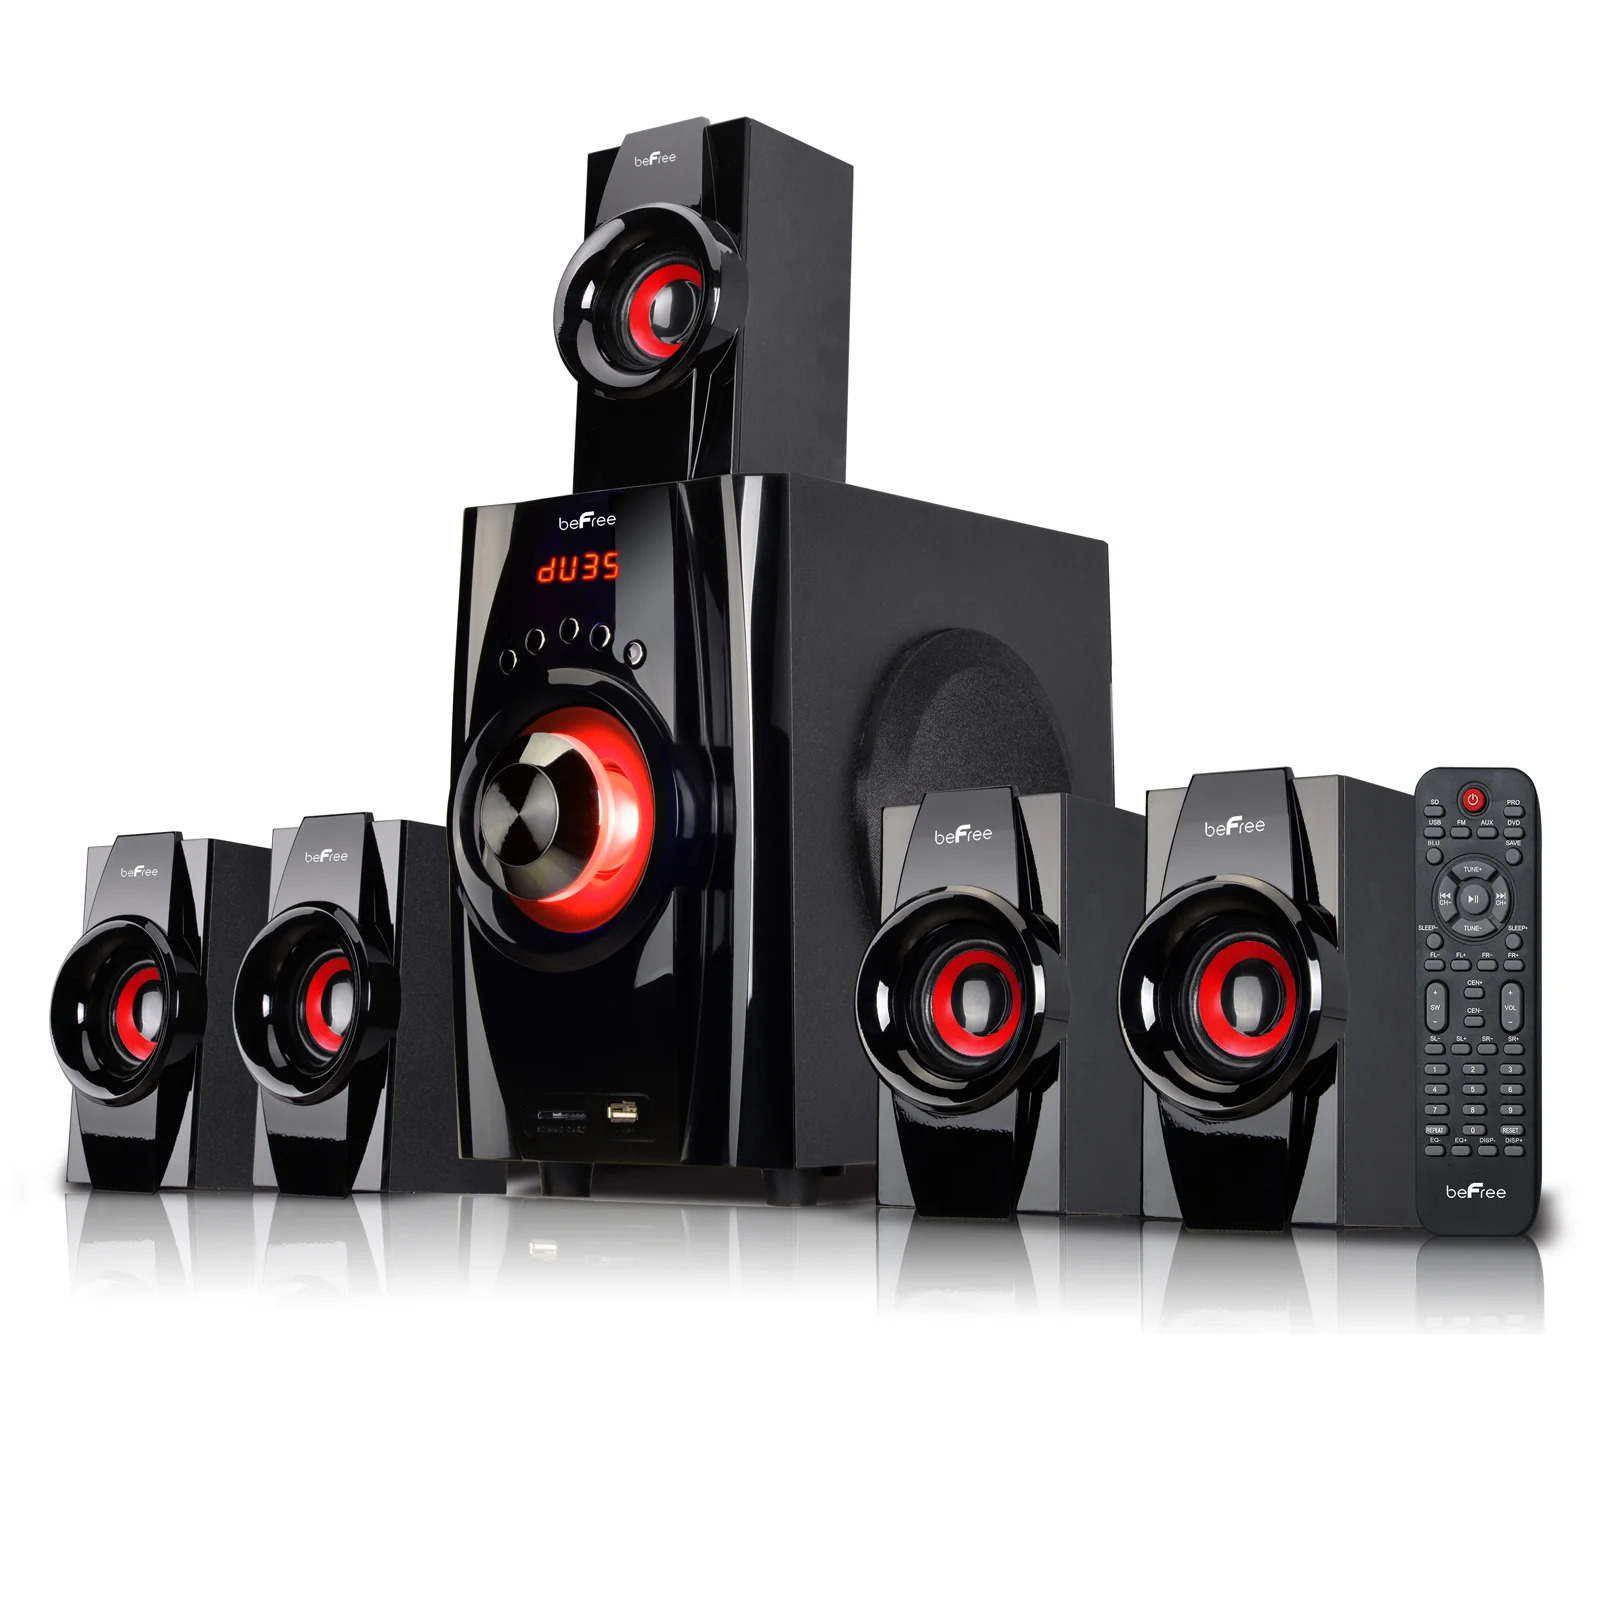 befree sound 5.1 channel surround sound bluetooth speaker system- red - image 1 of 1